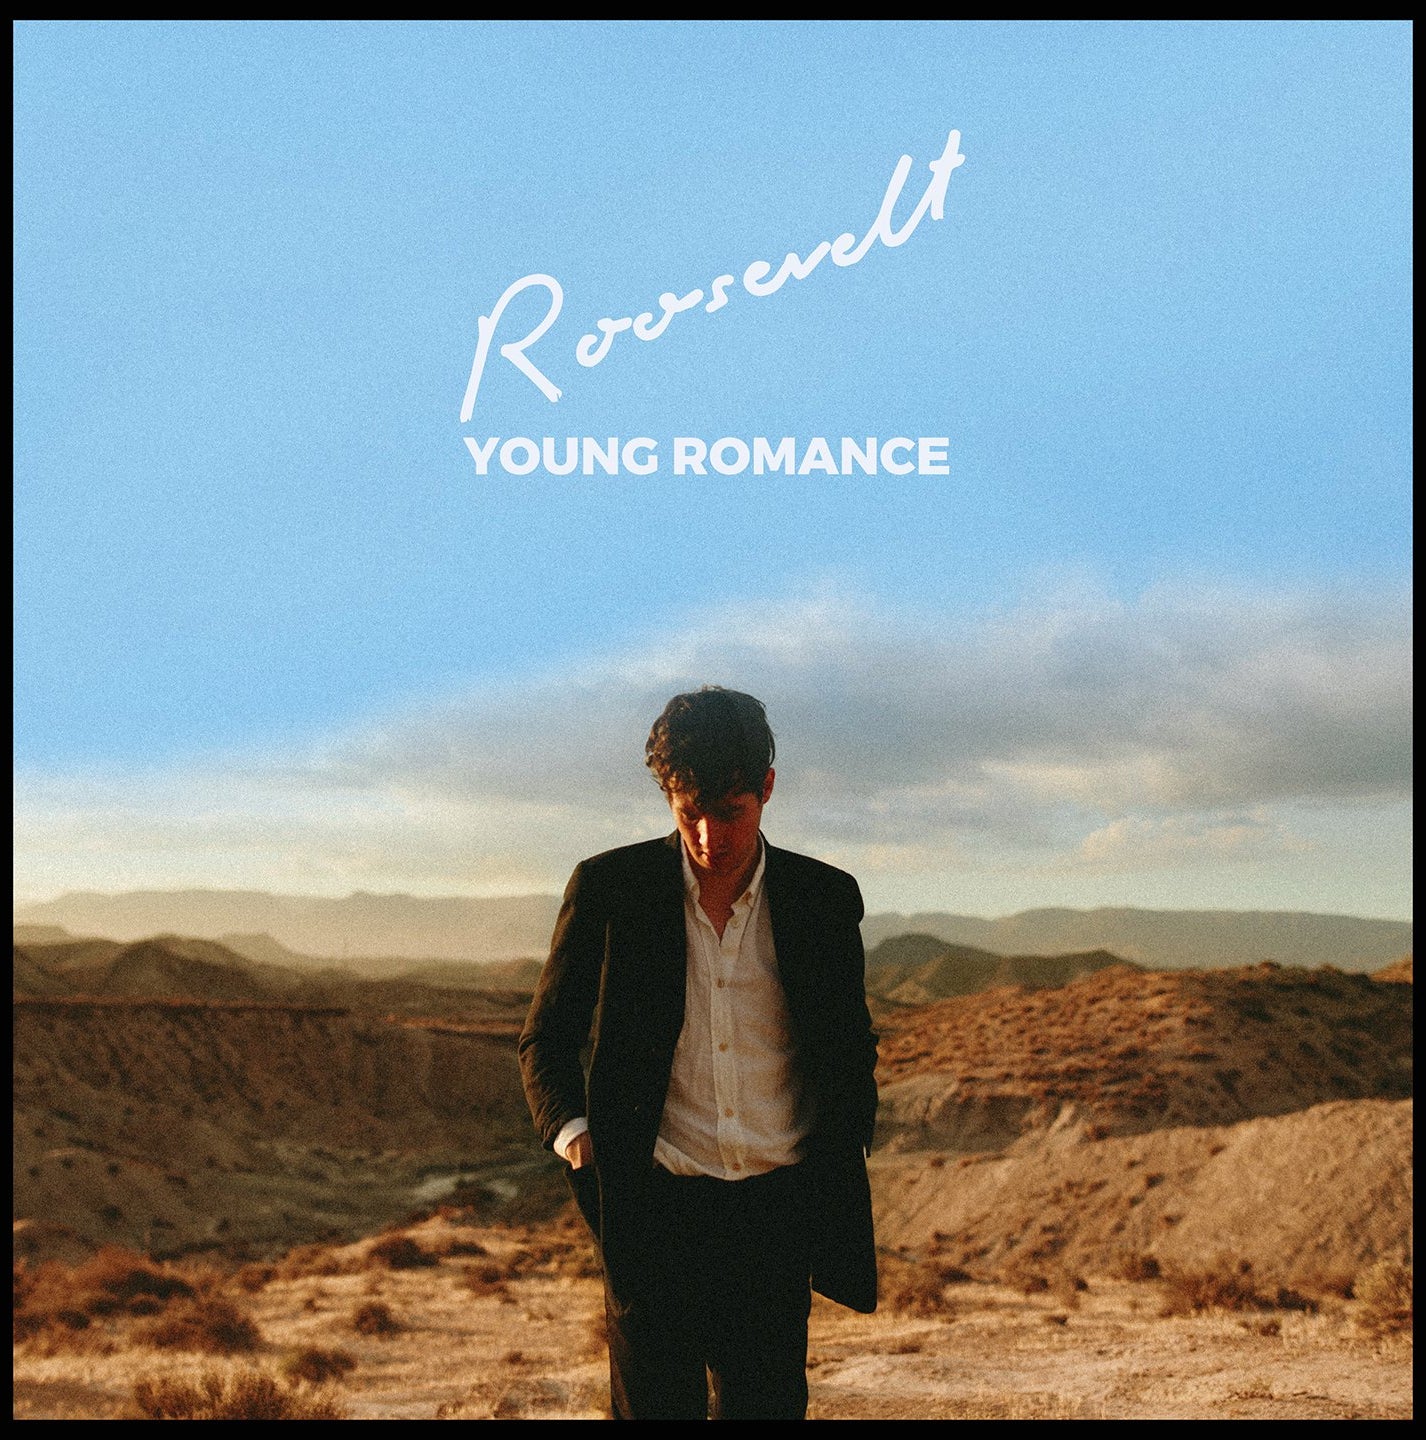 roosevelt young romance city slang